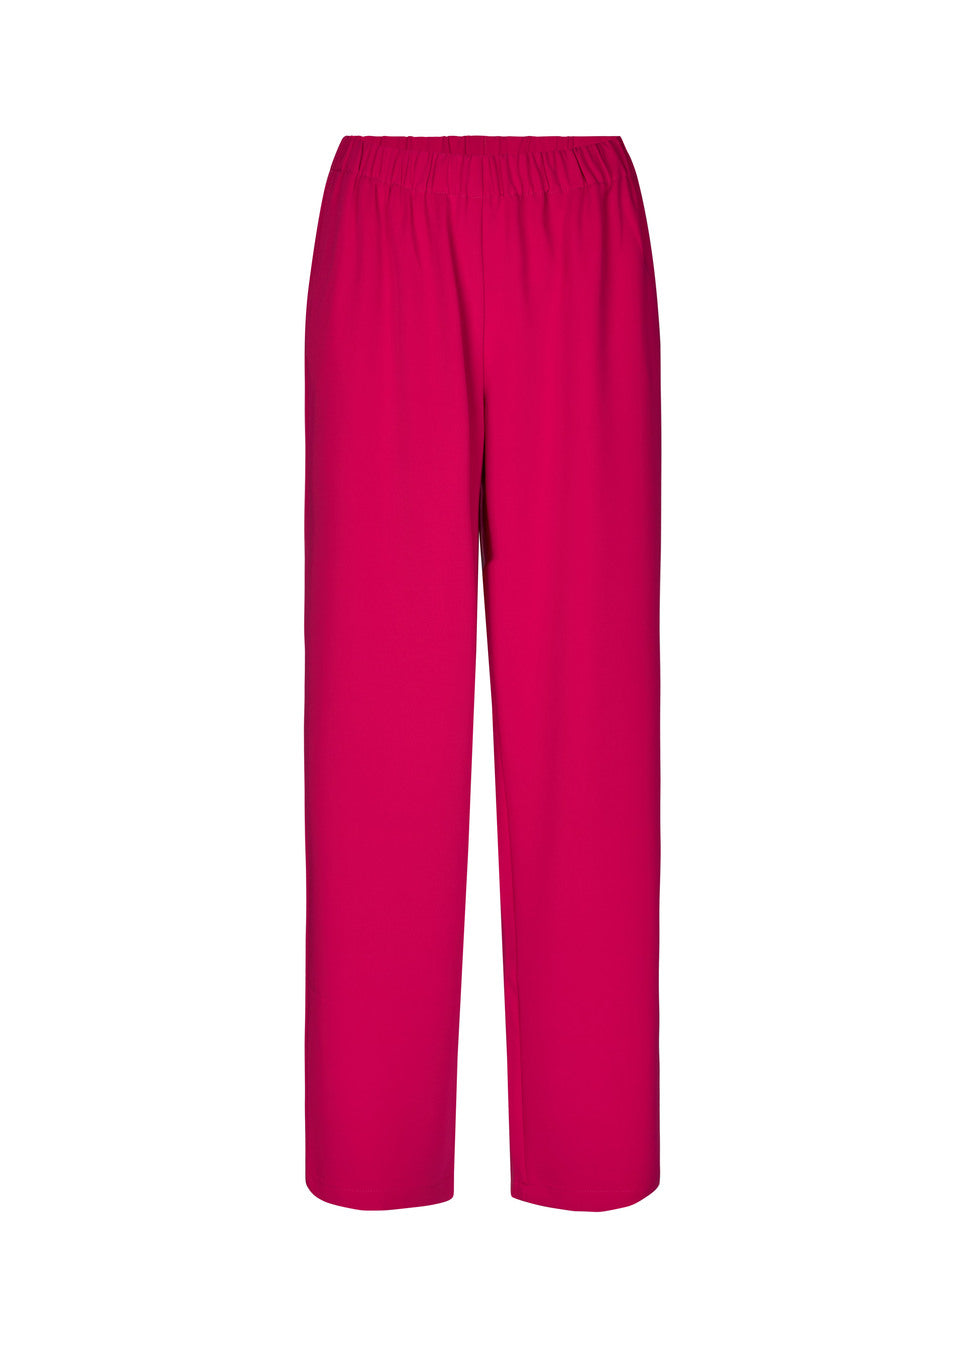 Modström - PerryMD pants - Virtual Pink